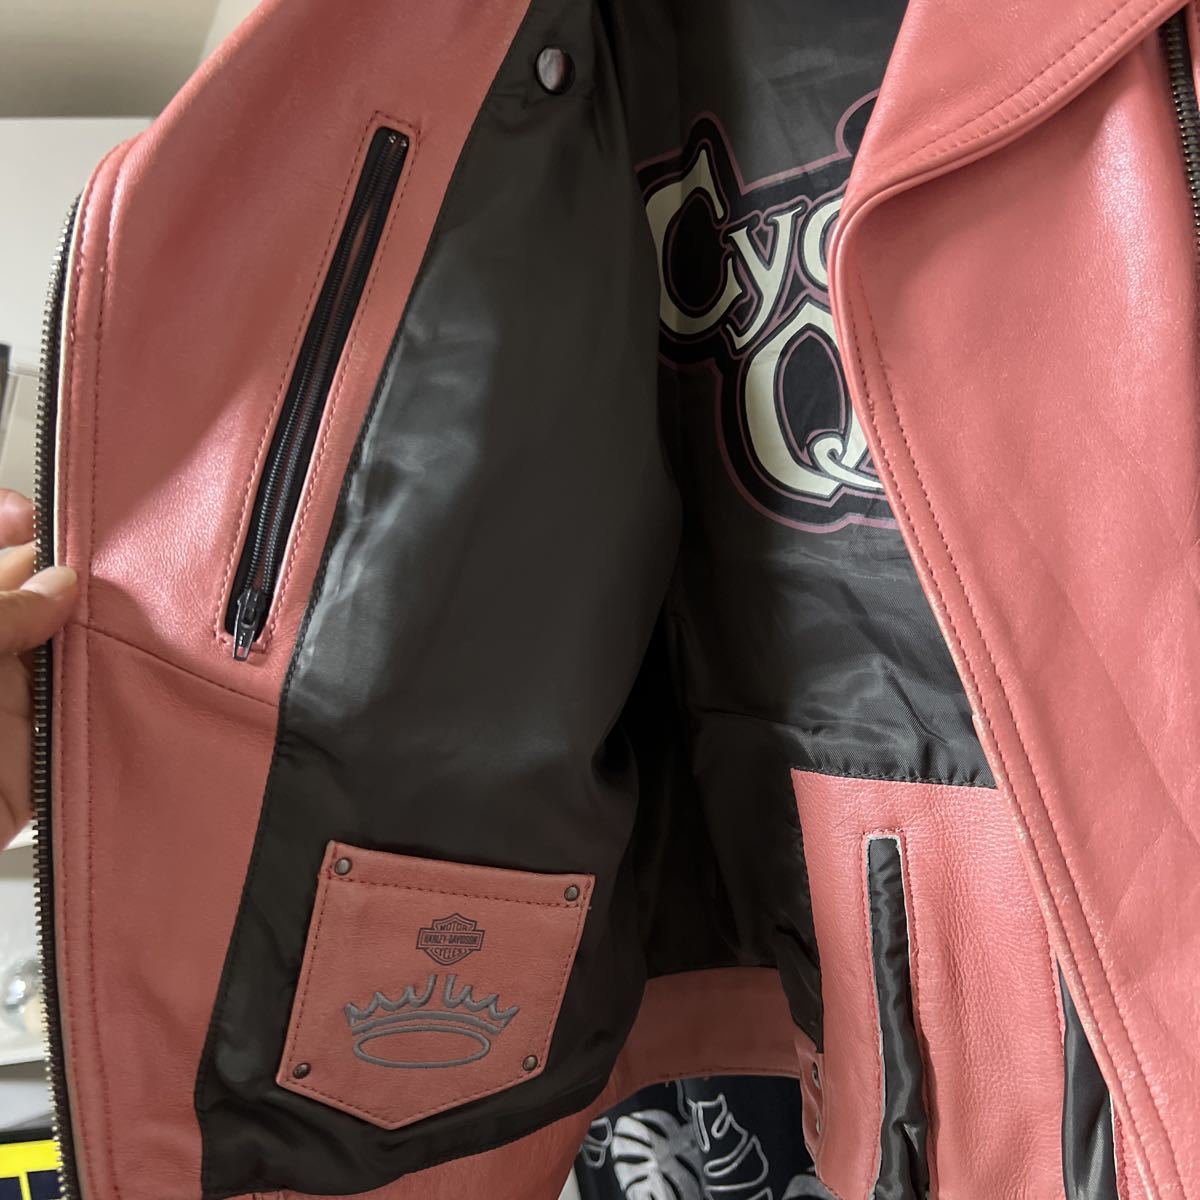 HARLEY-DAVIDSON кожаный жакет розовый Harley Davidson натуральная кожа кожаная куртка женский 